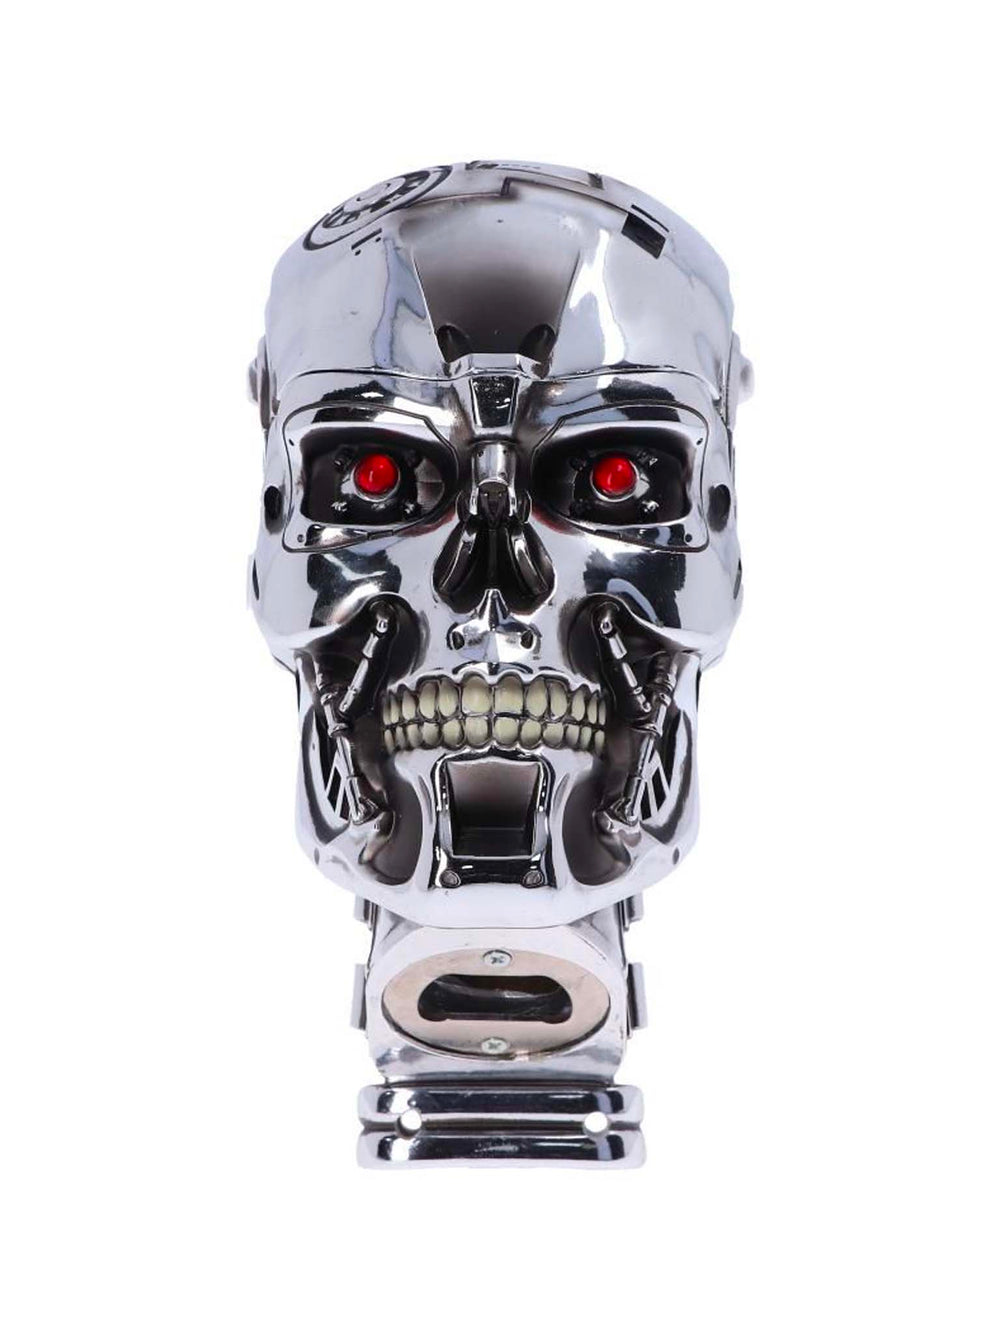 Highly-detailed Robotic head sculpted Terminator bottle opener, bottle opener 